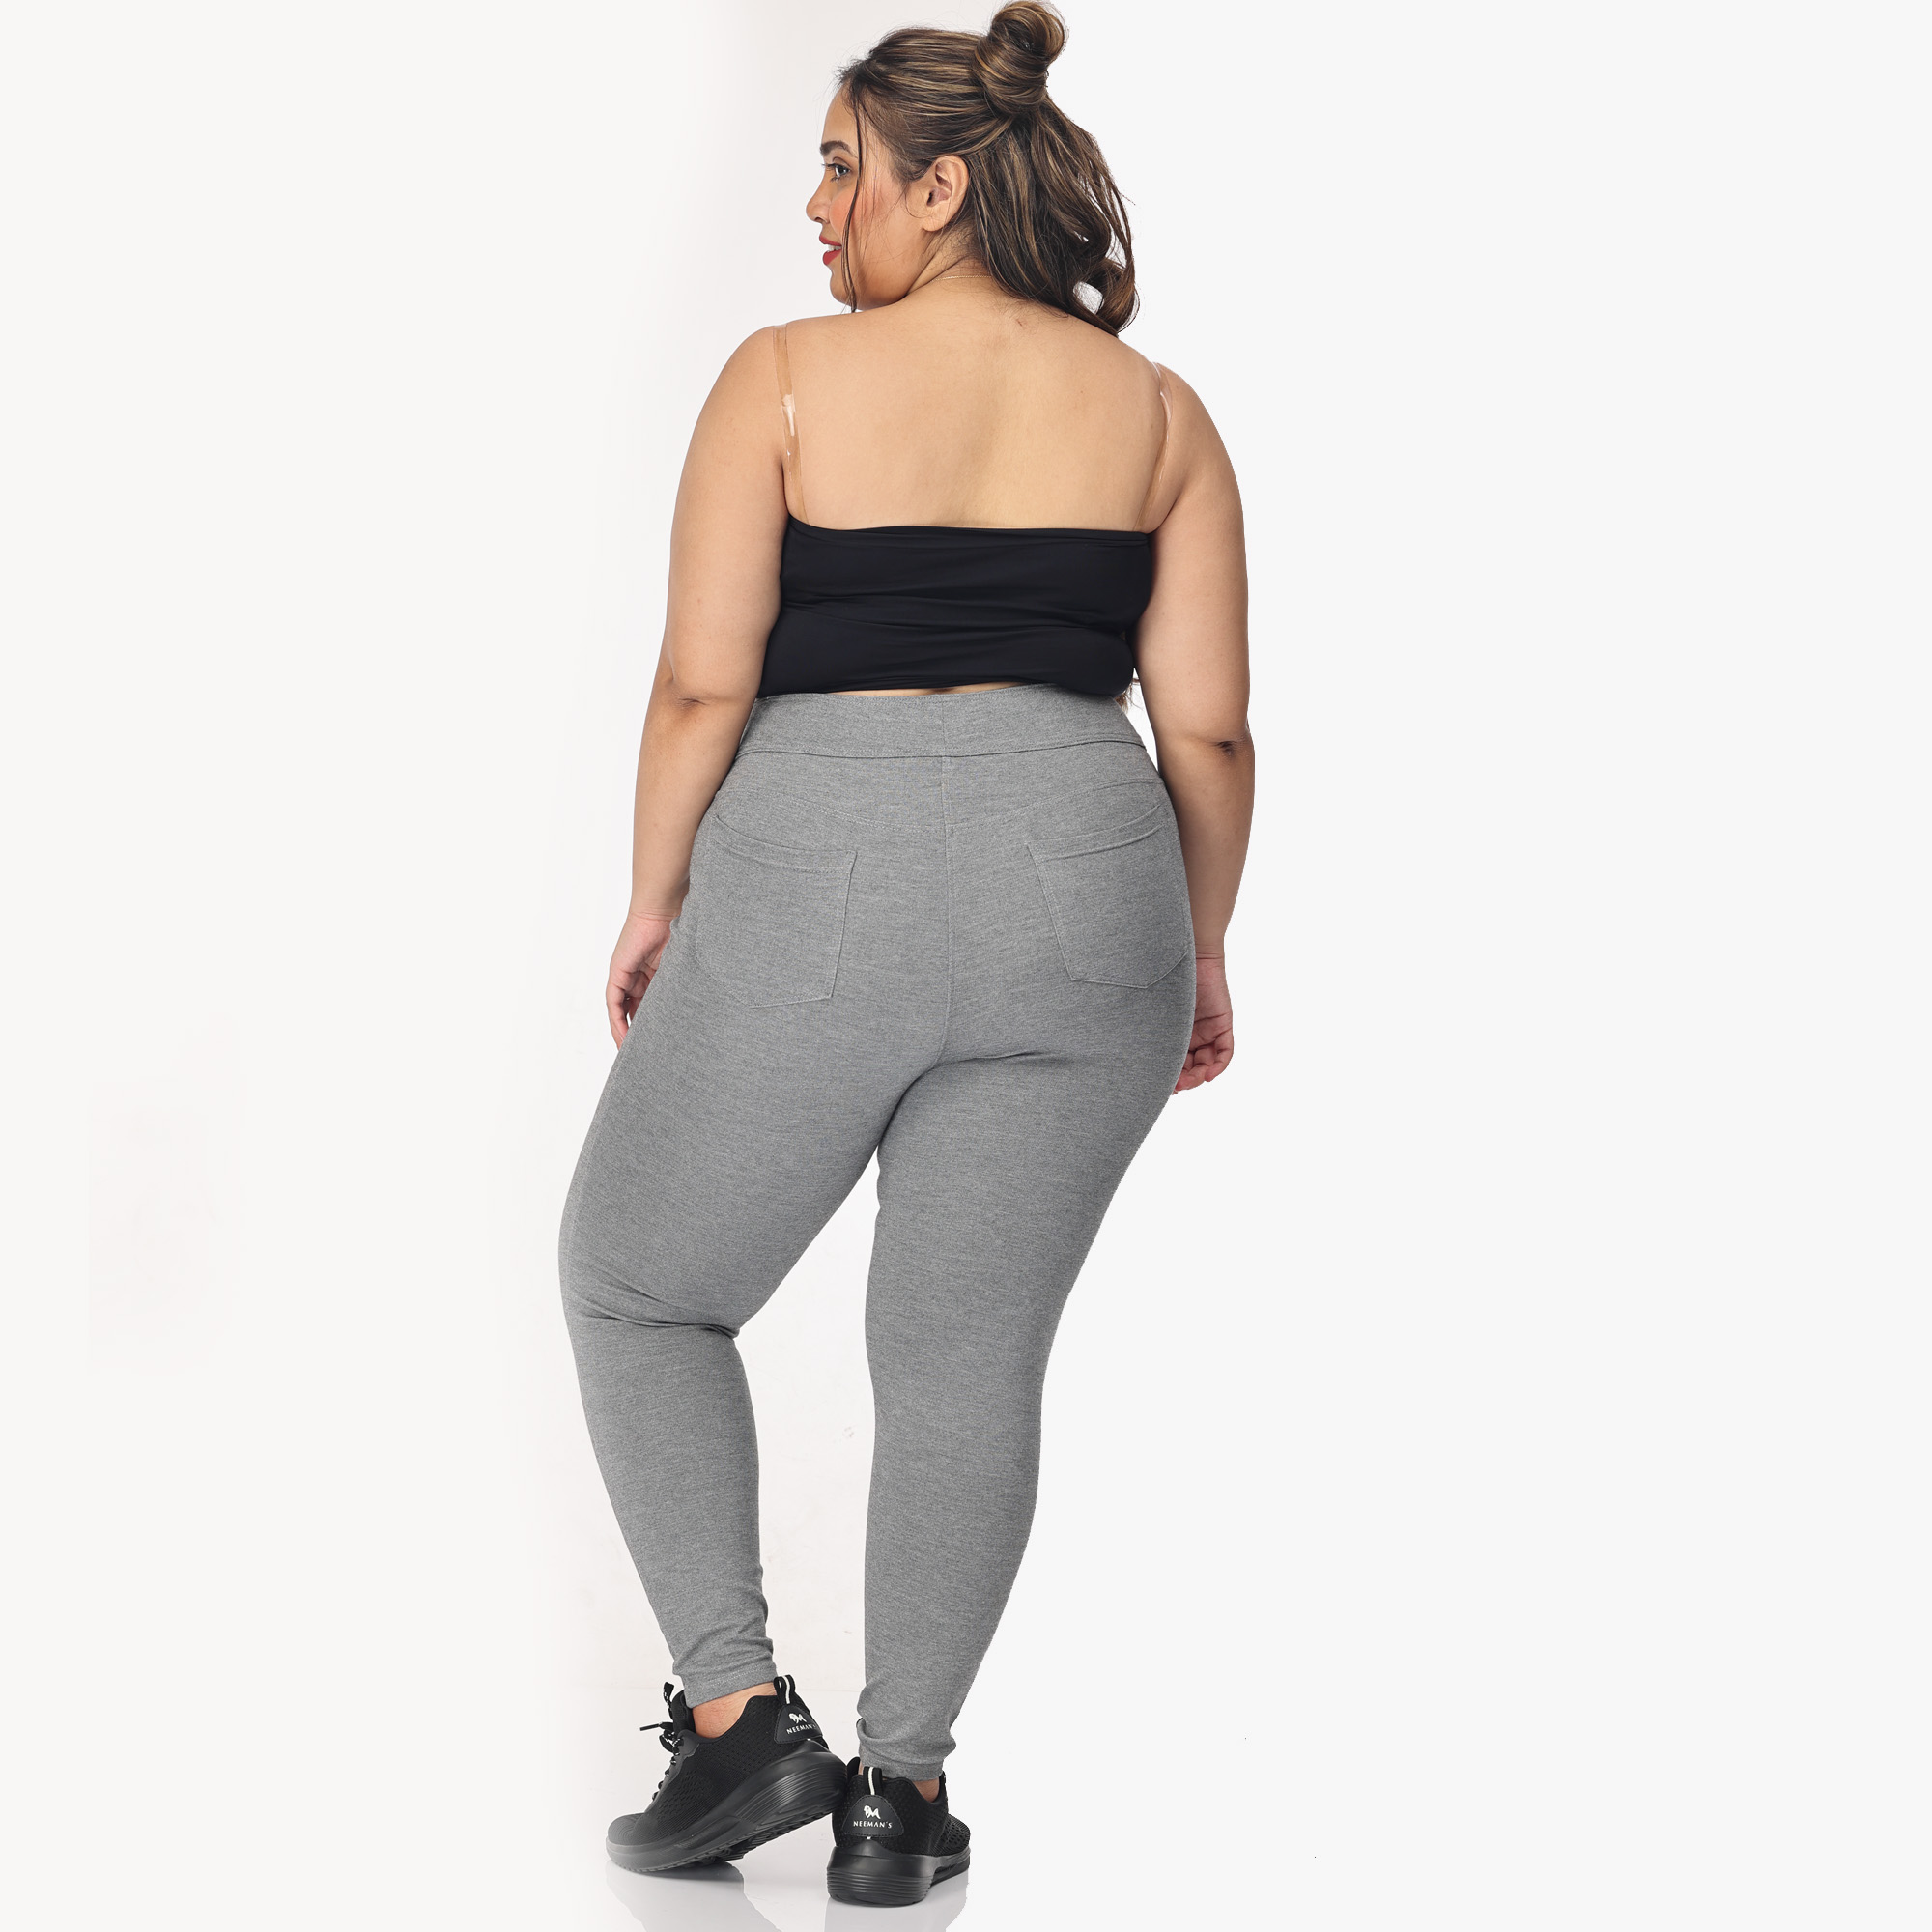 Grey jeggings women Plus size compression pant 2 back pockets